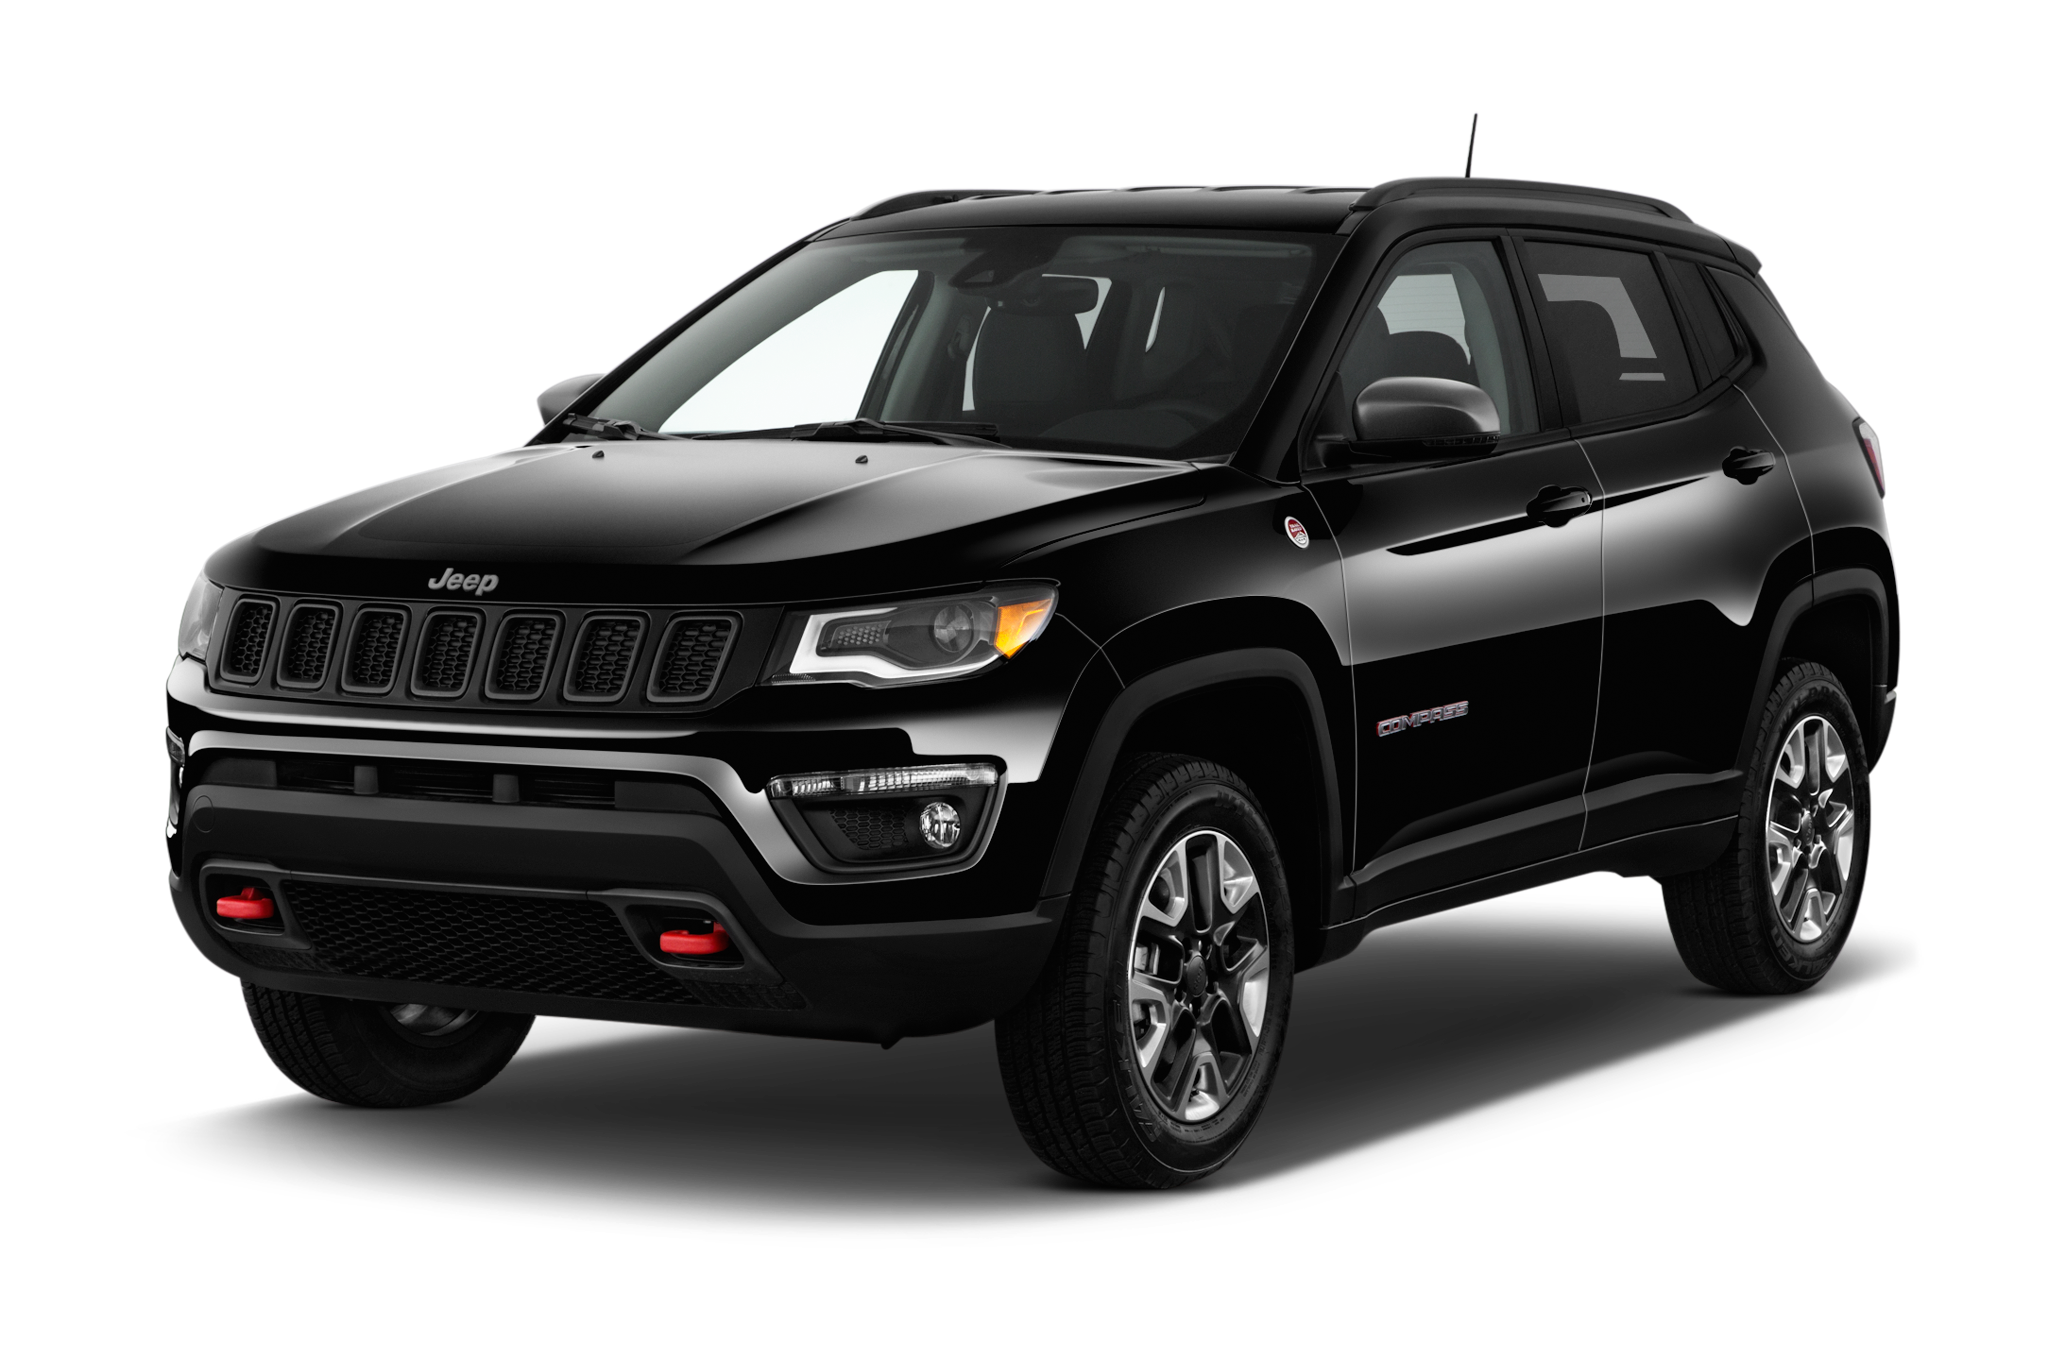 2020 Jeep Compass Trailhawk 4x4 Reviews MSN Autos